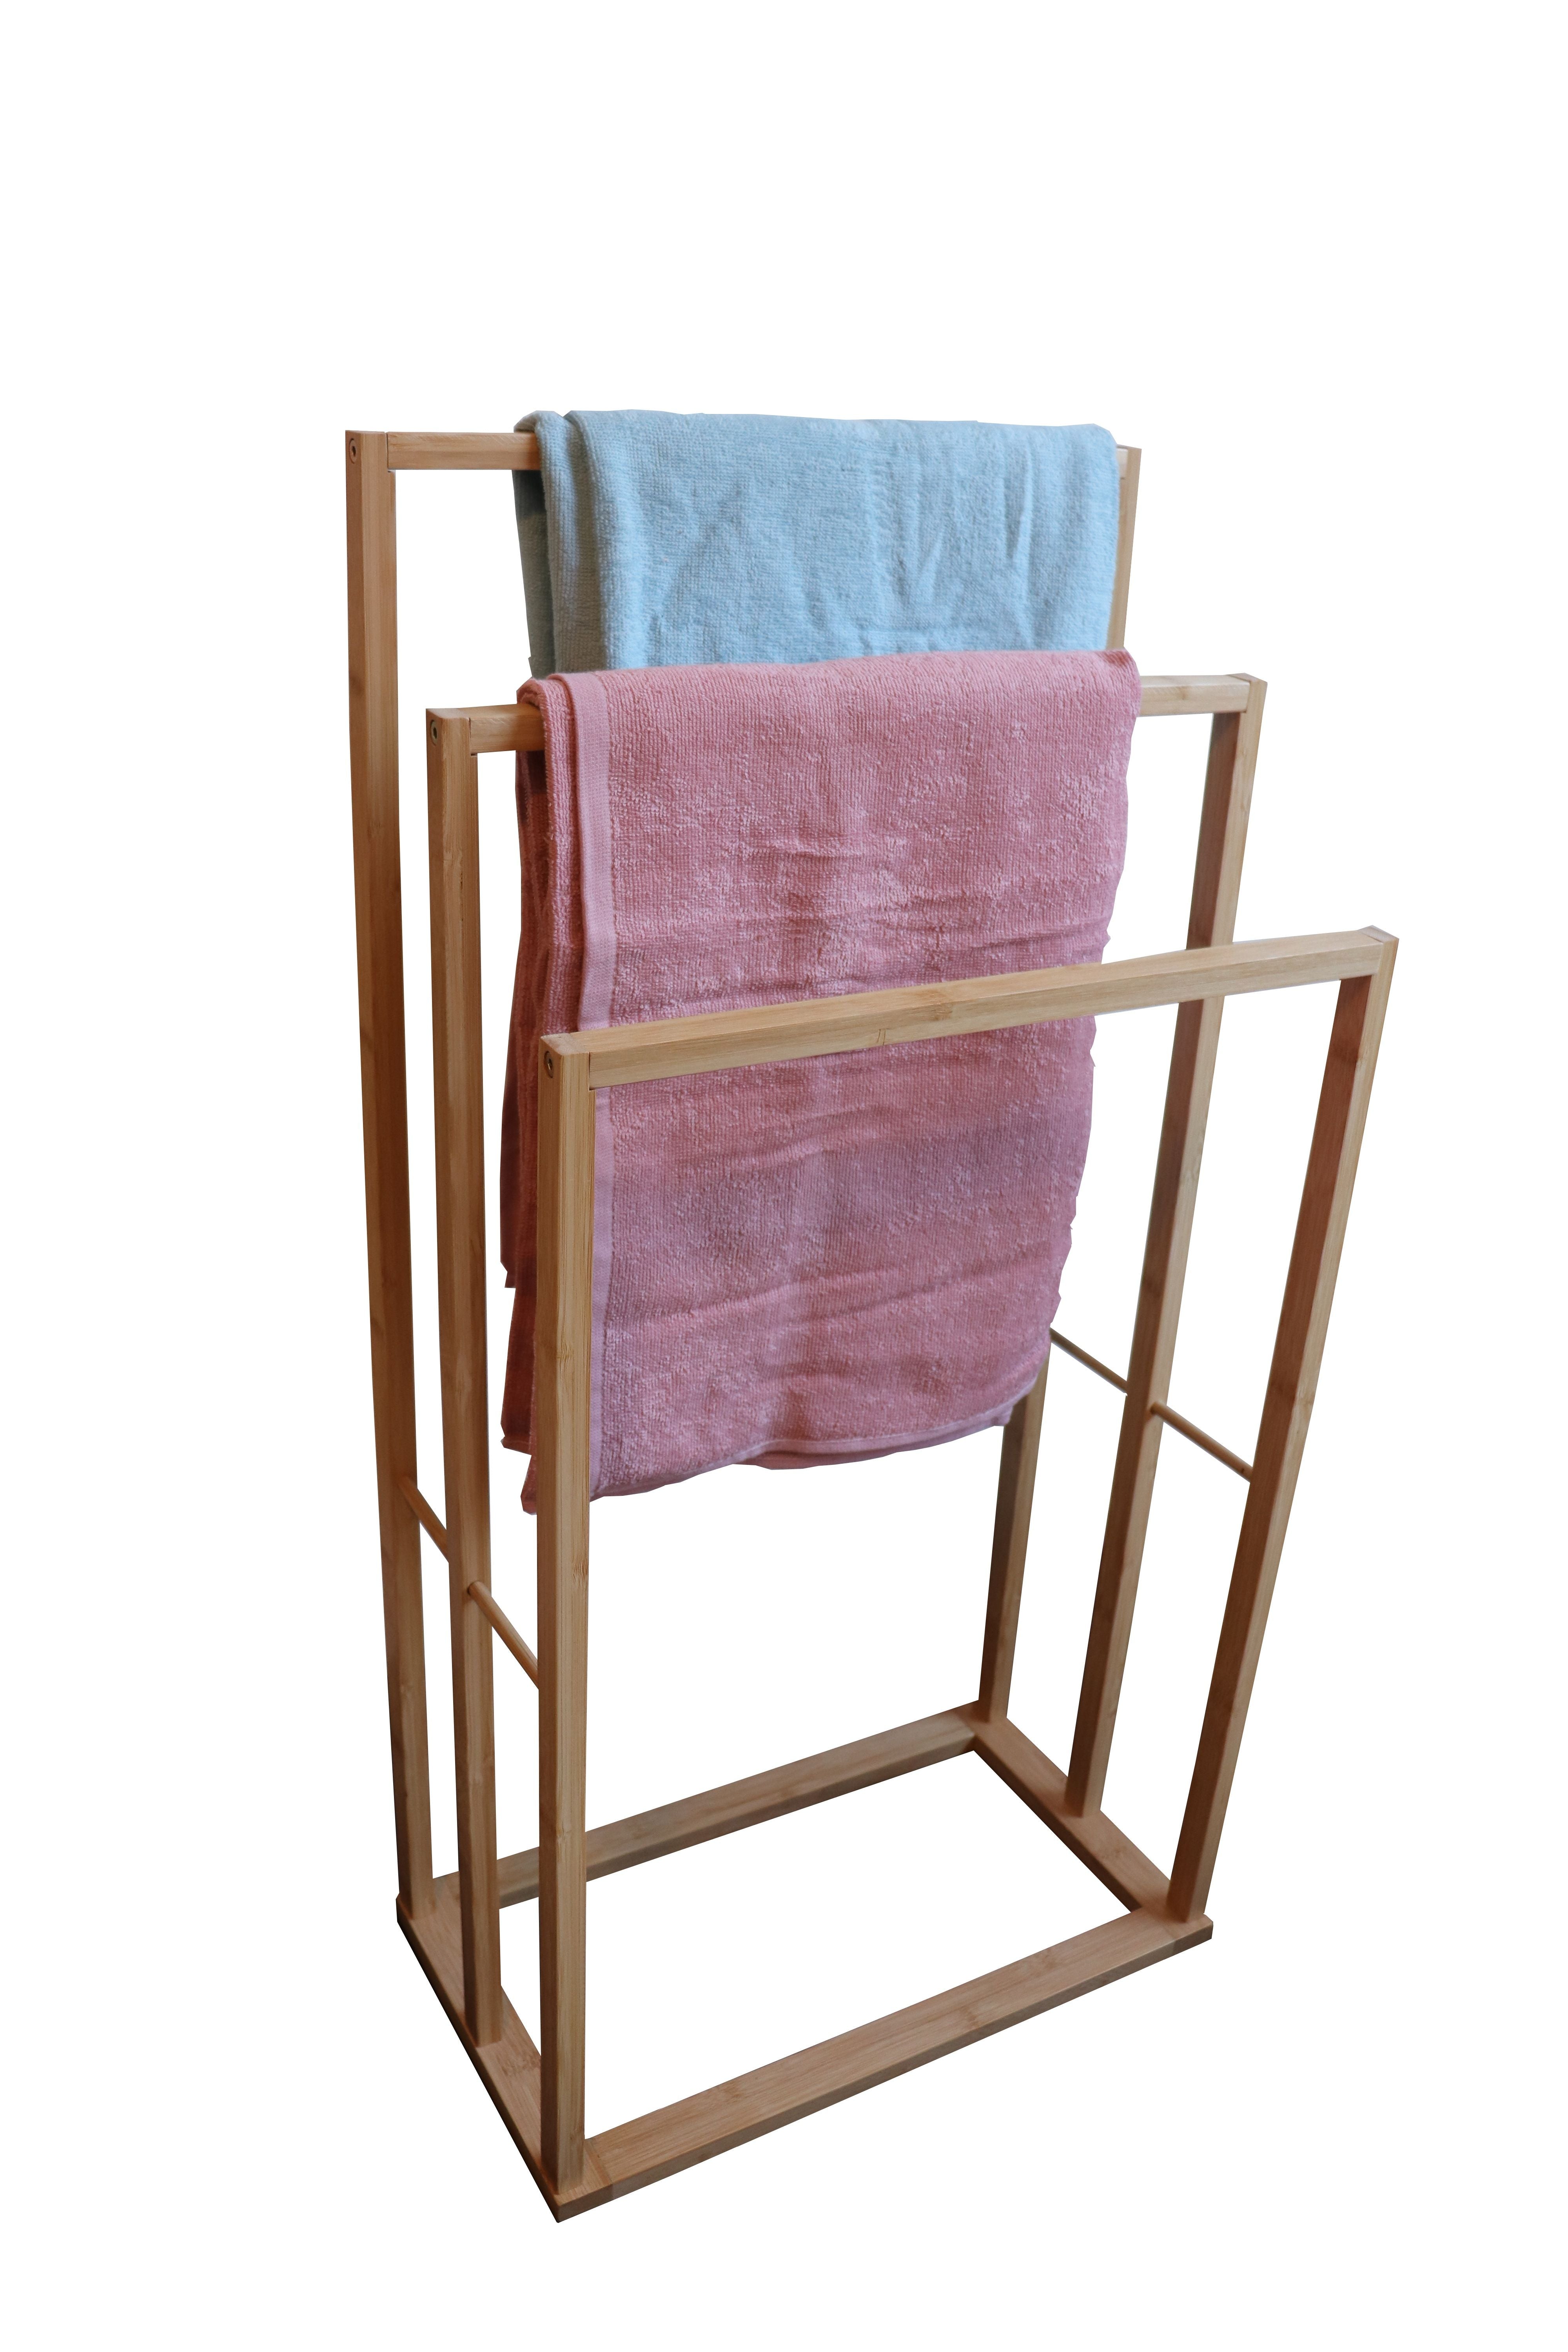 Bamboo Towel Bar Holder Rack 3-Tier Freestanding for Bathroom and Bedroom - SILBERSHELL